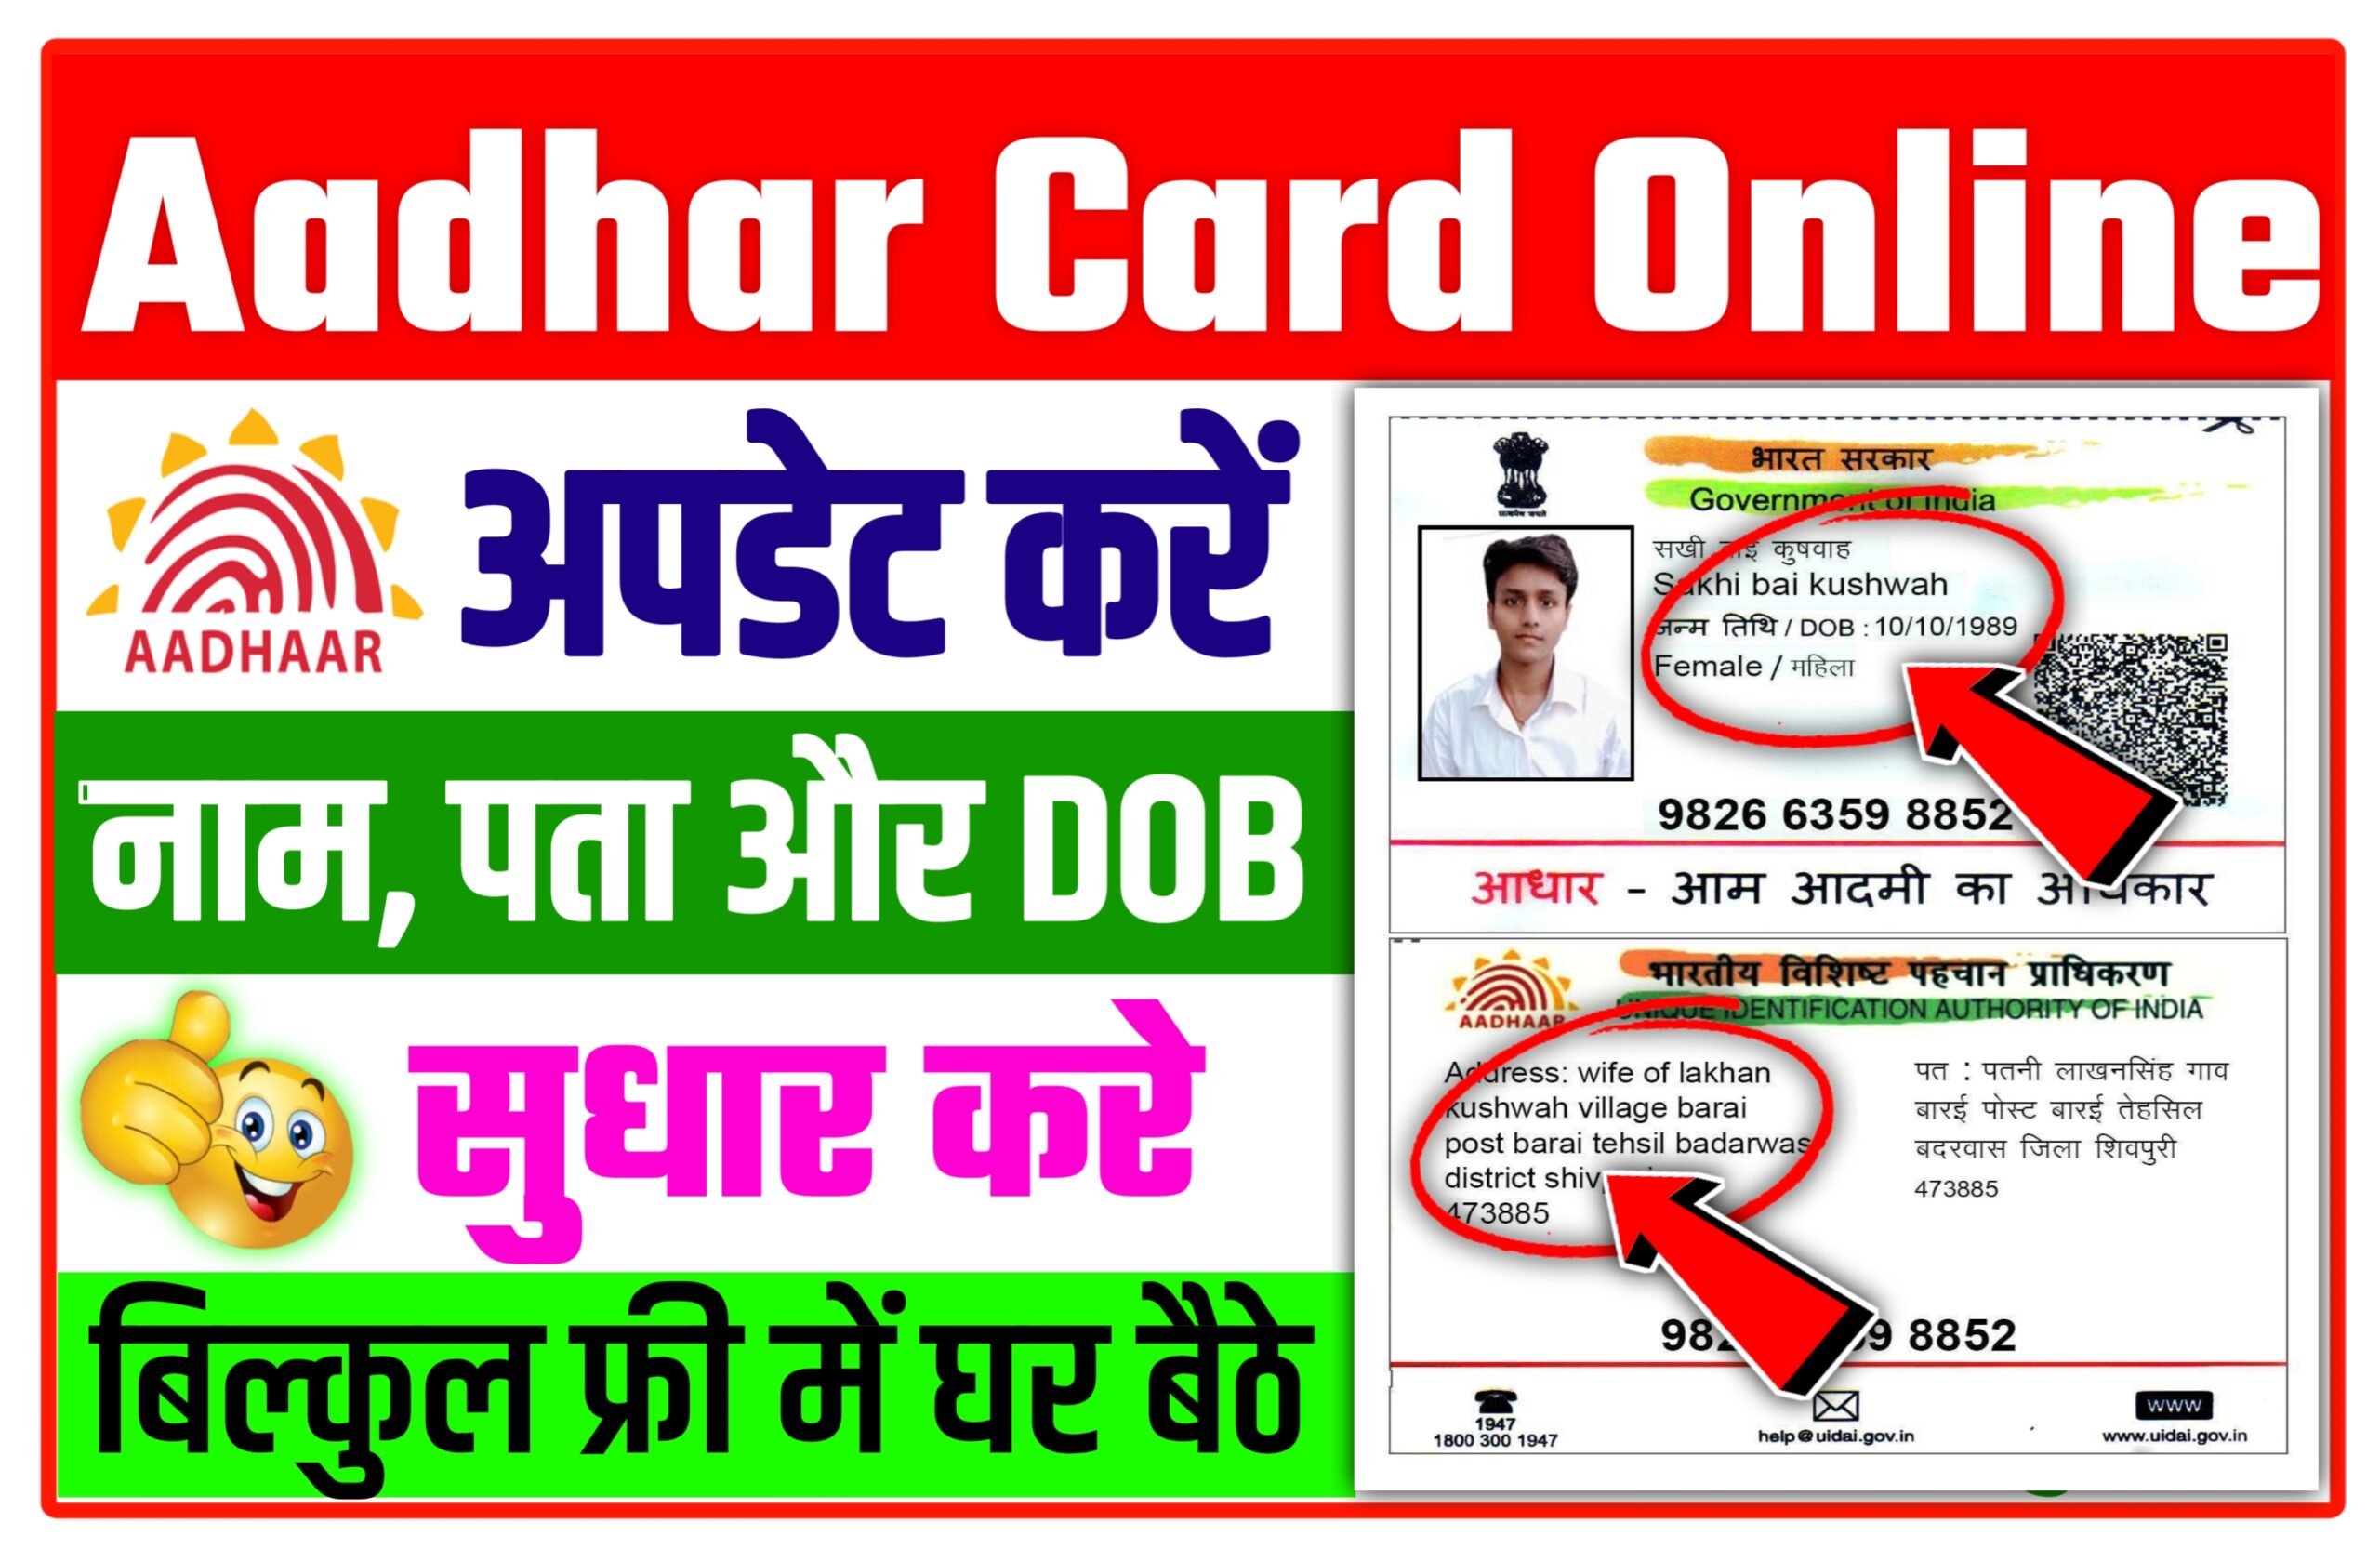 aadhar card latest news , aadhar card new update , aadhar card update kaise kare , aadhar card update kaise kare , aadhar card download , aadhar card update date of birth , aadhar card today news